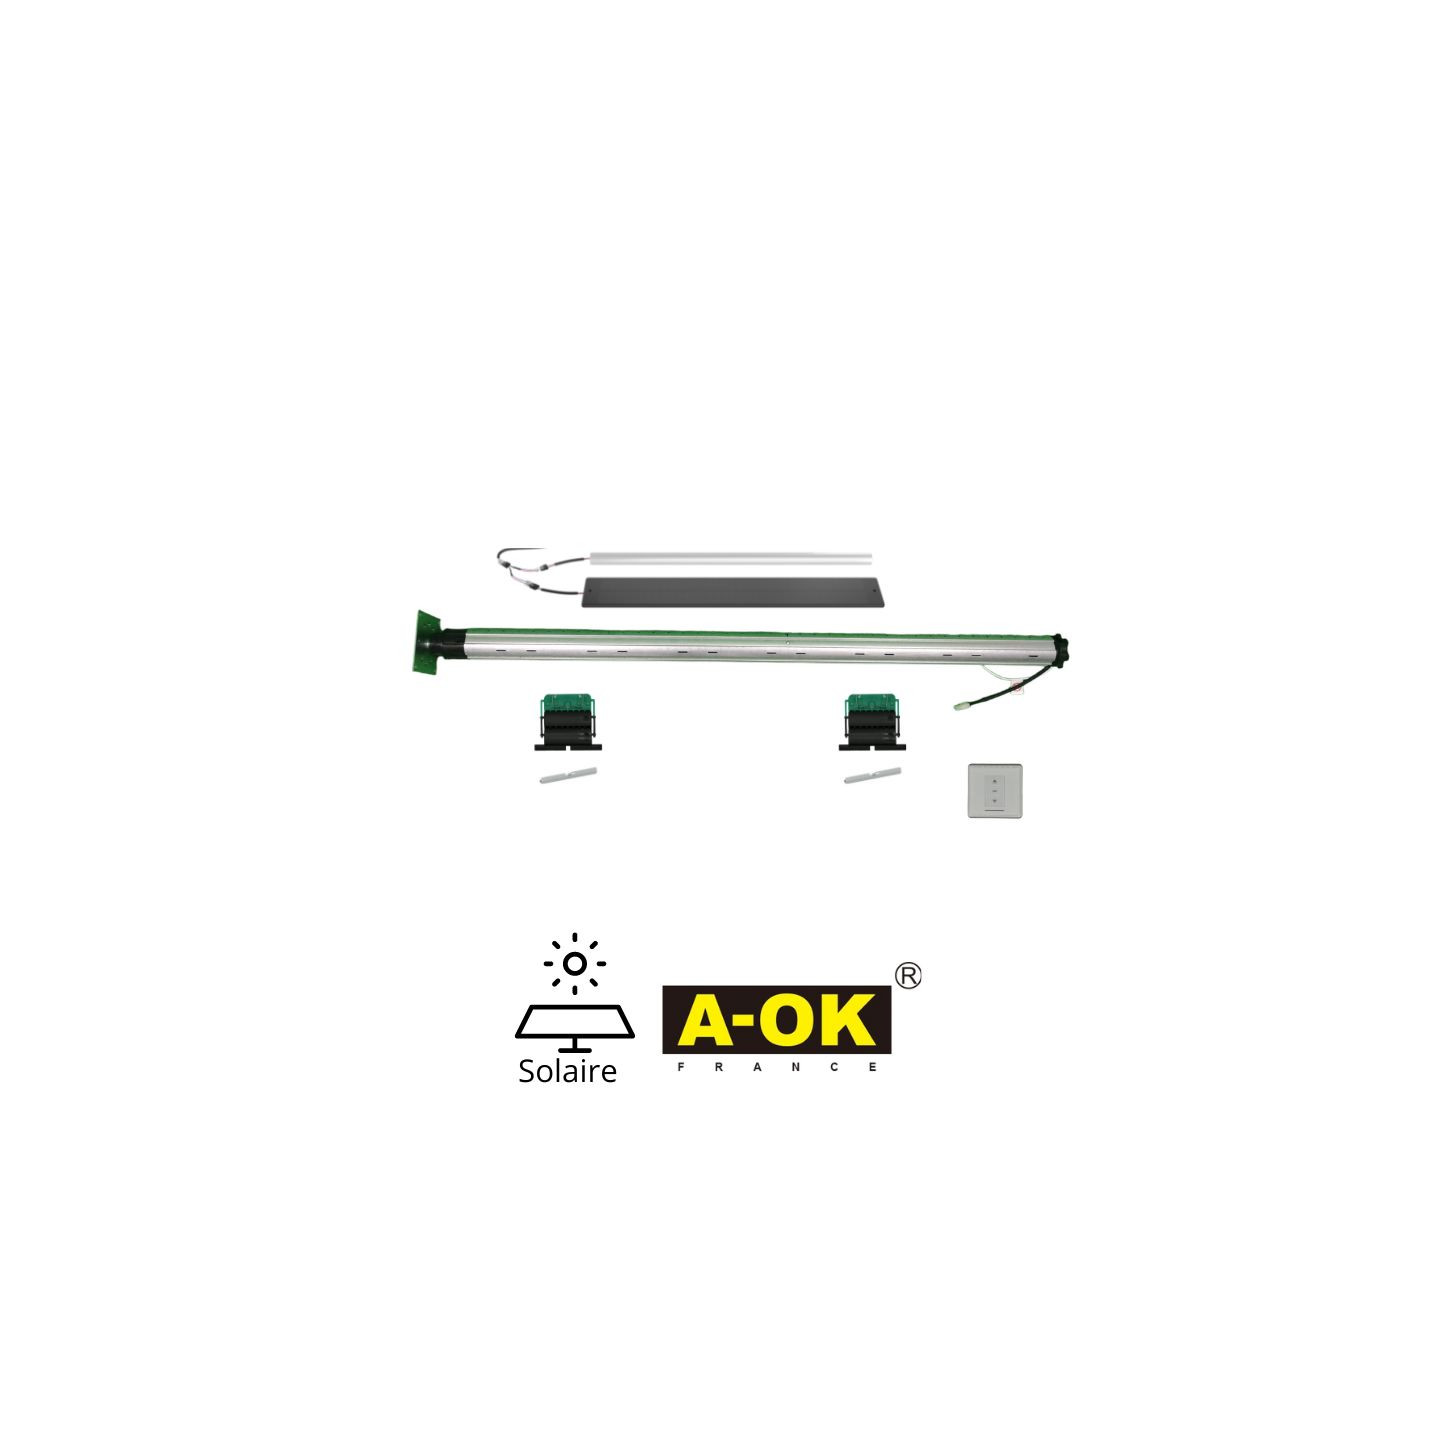 Axe & kit motorisation volet roulant solaire Somfy